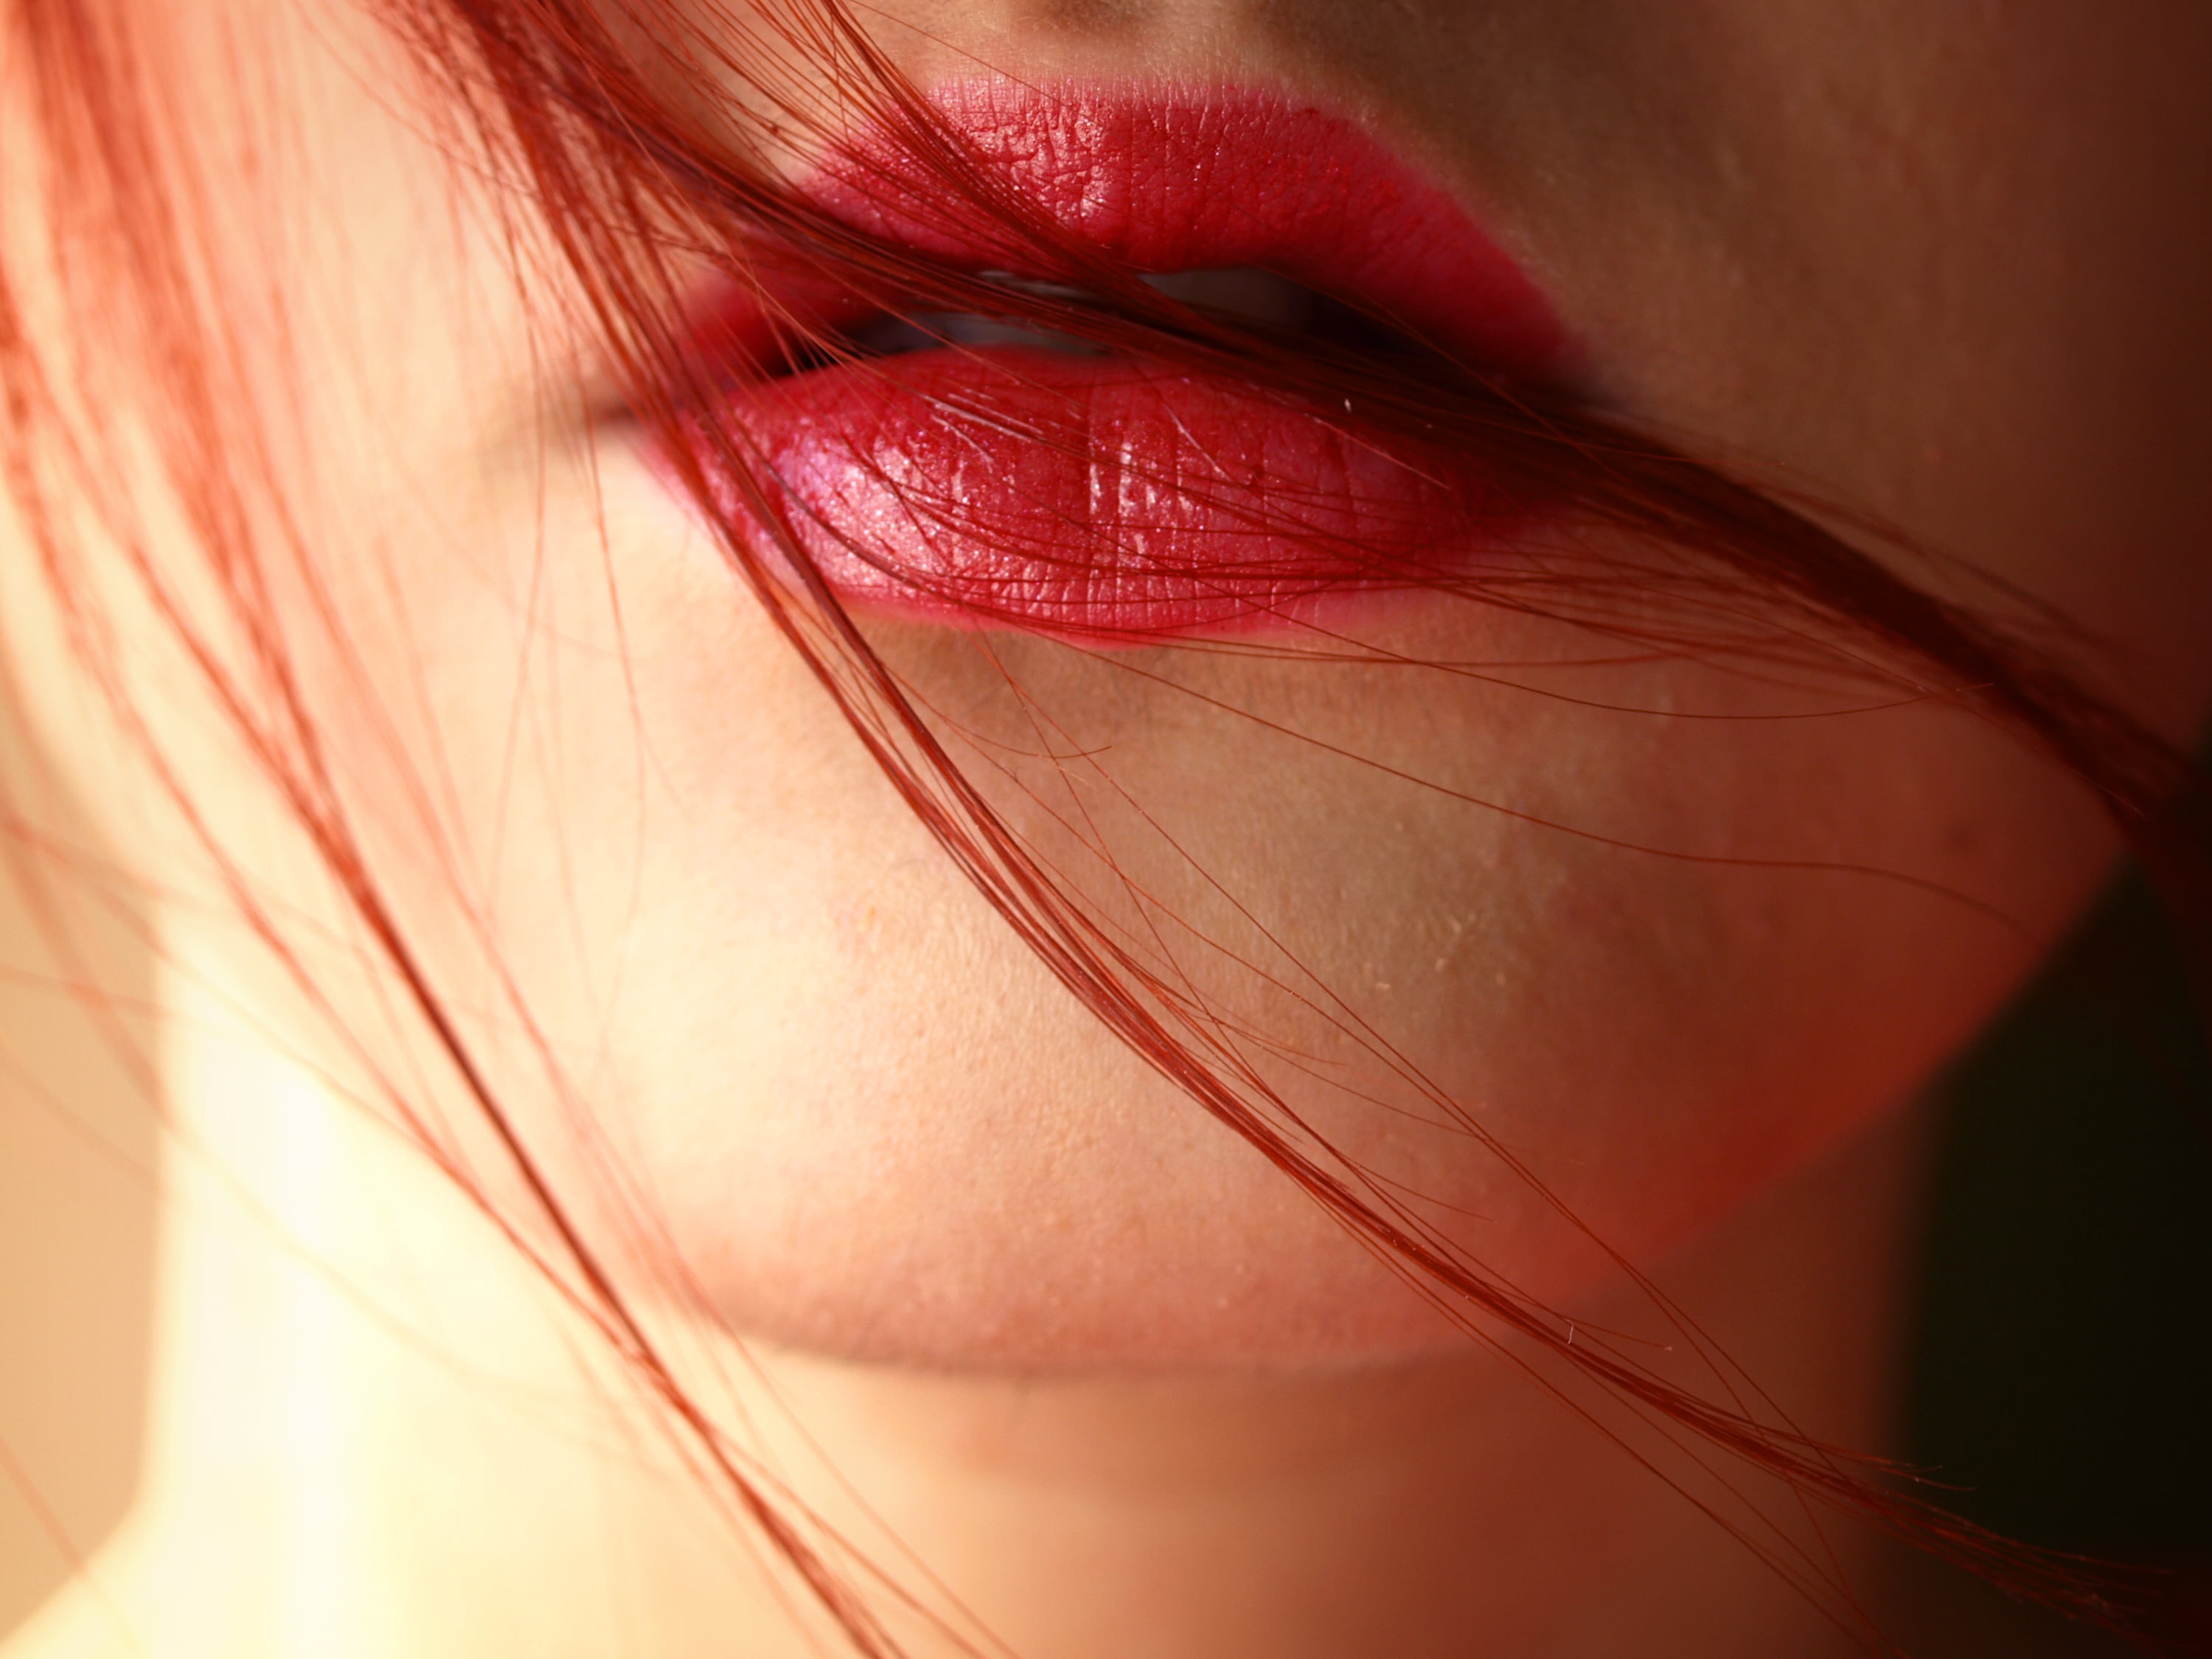 Women's red lipstick, beauty, human Face, close-up, females, beautiful